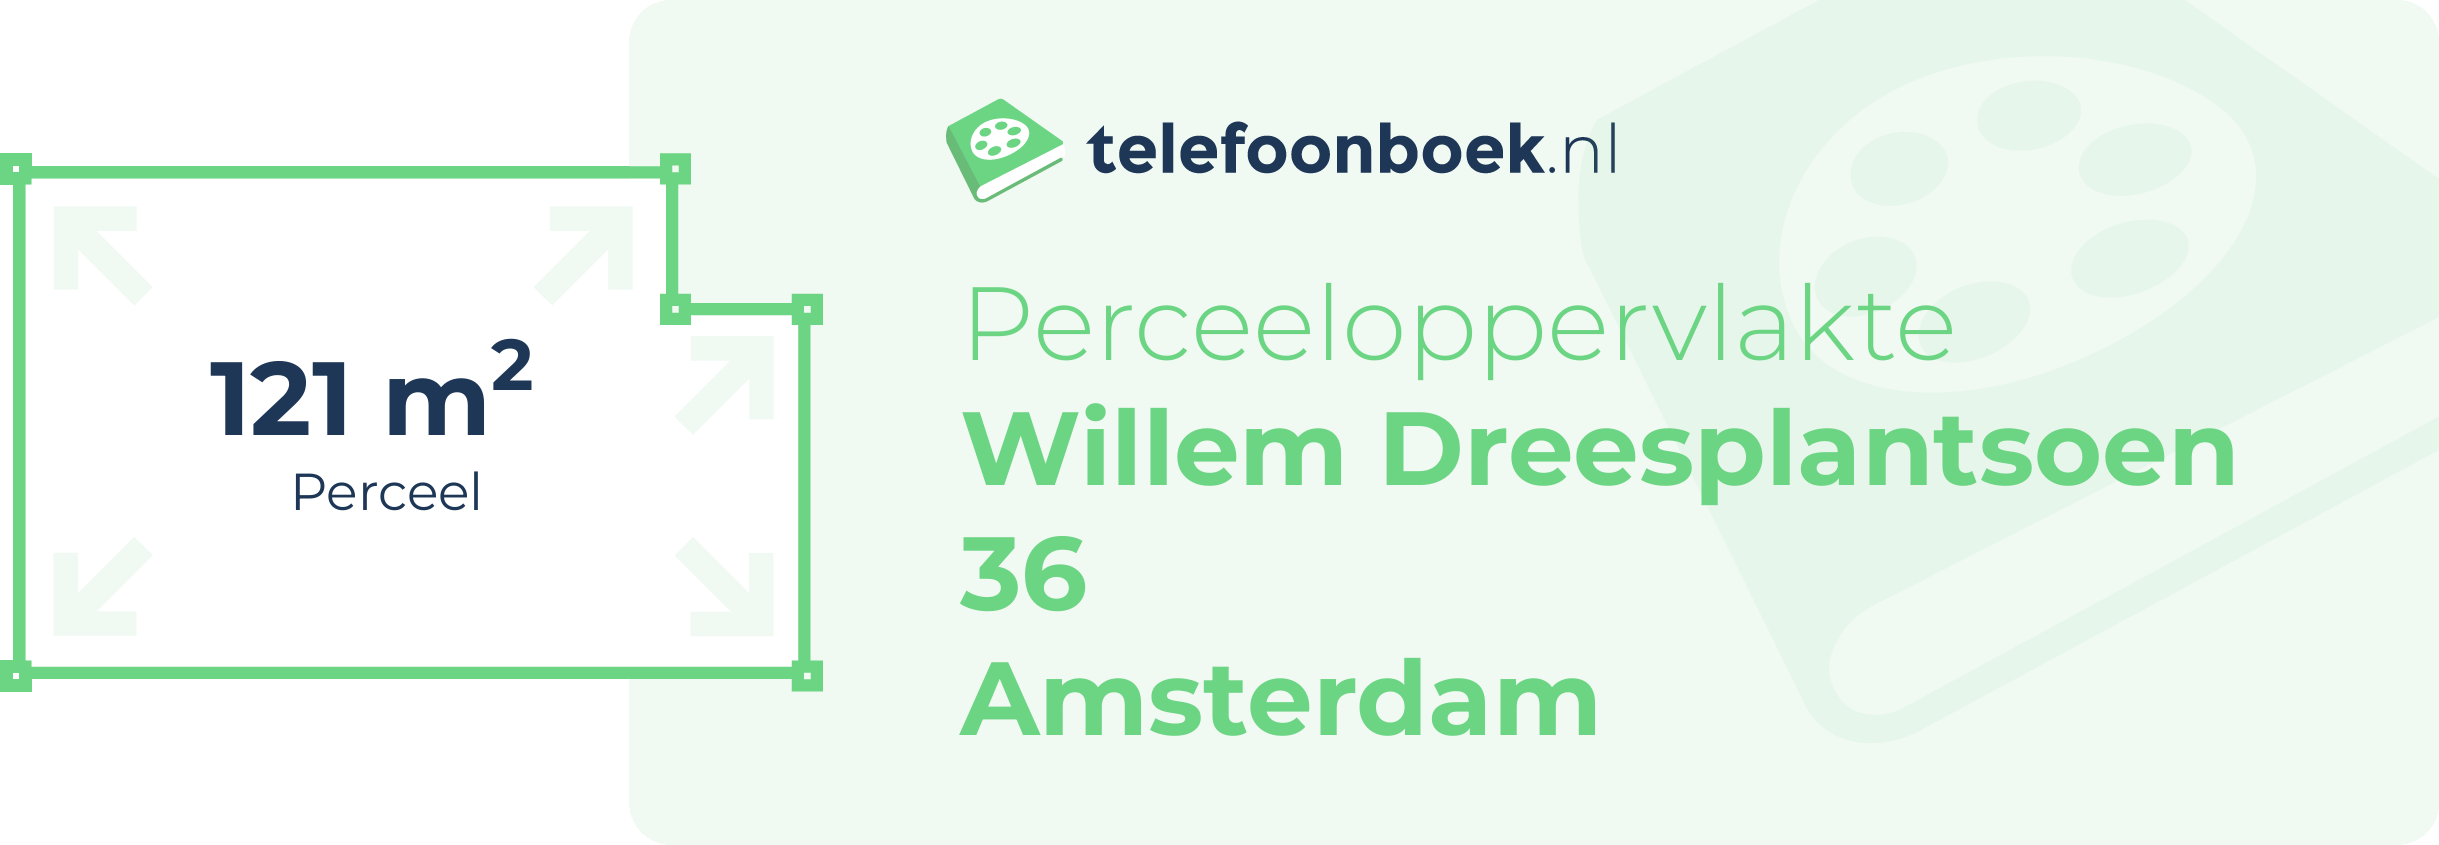 Perceeloppervlakte Willem Dreesplantsoen 36 Amsterdam